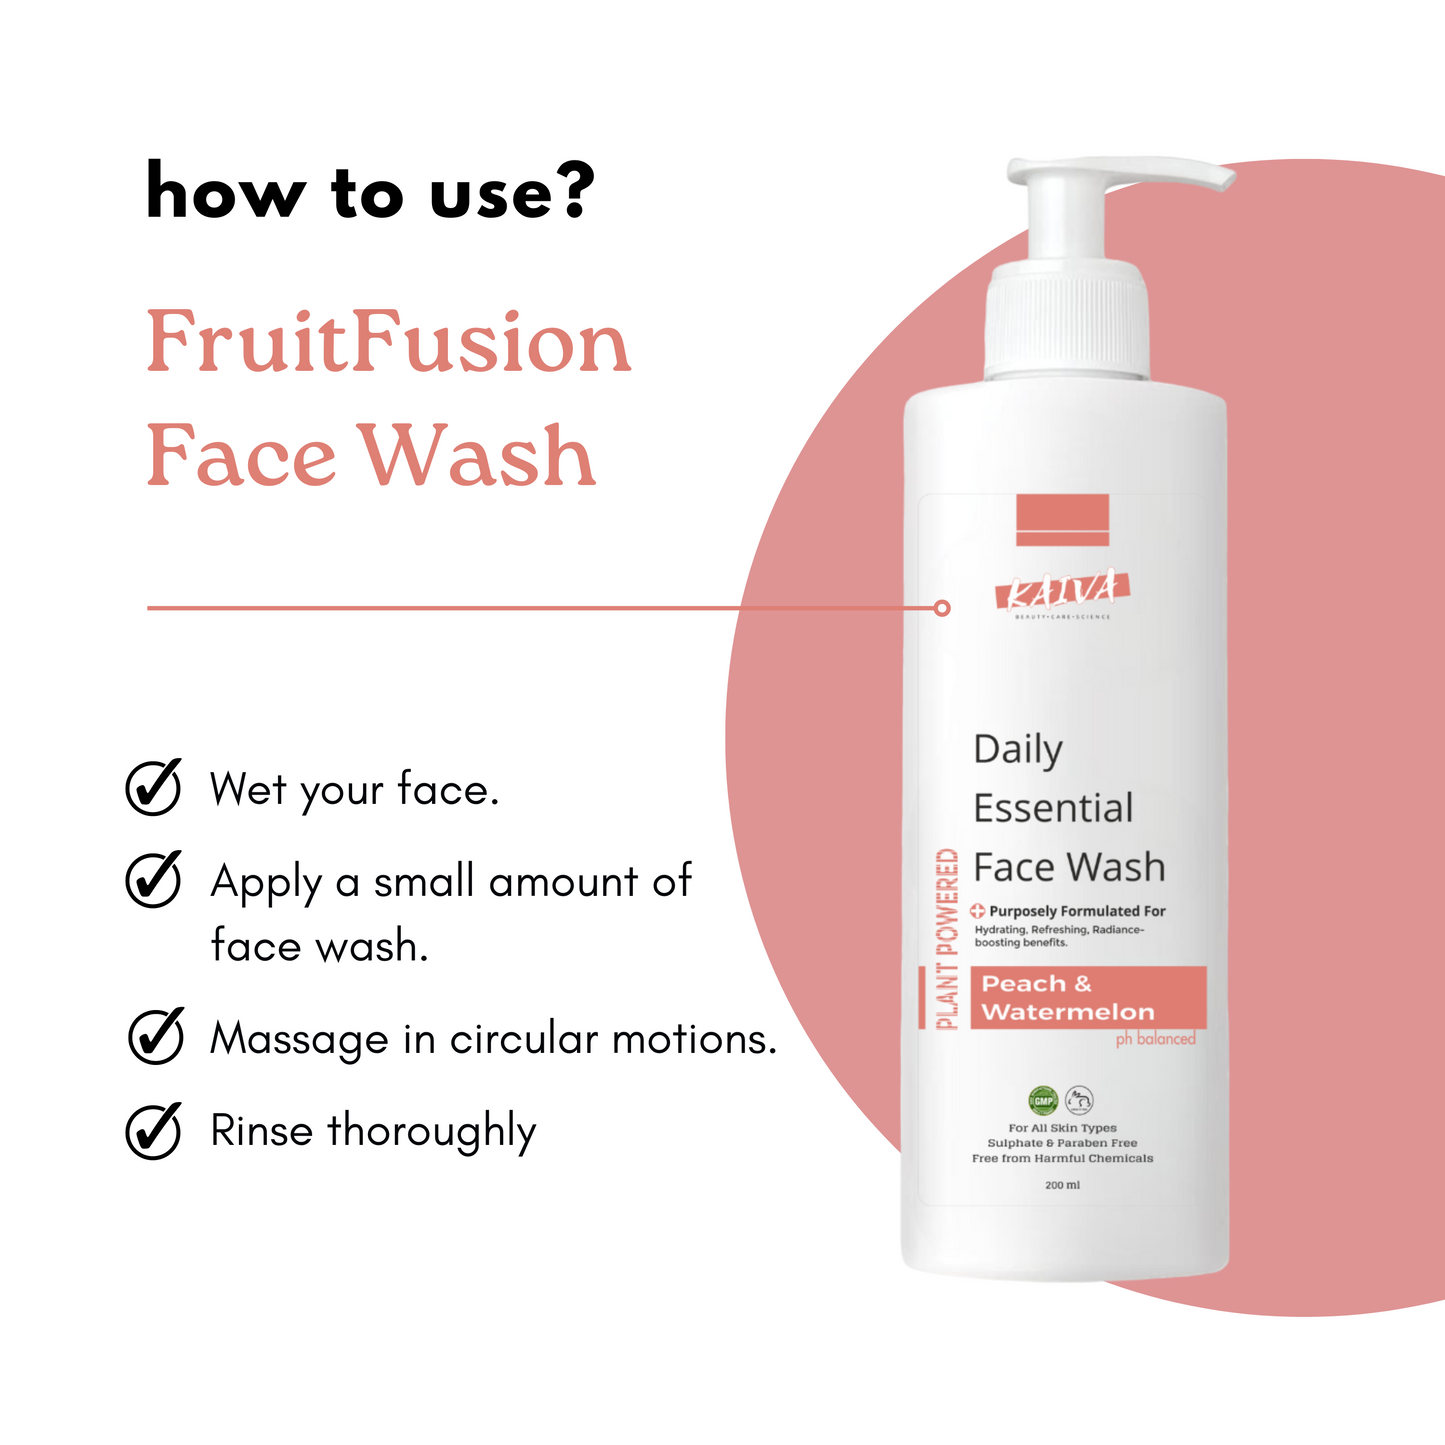 FruitFusion Refresh – Peach & Watermelon Face Wash – For Women & Men | Sulphates & Paraben Free – 200 ml